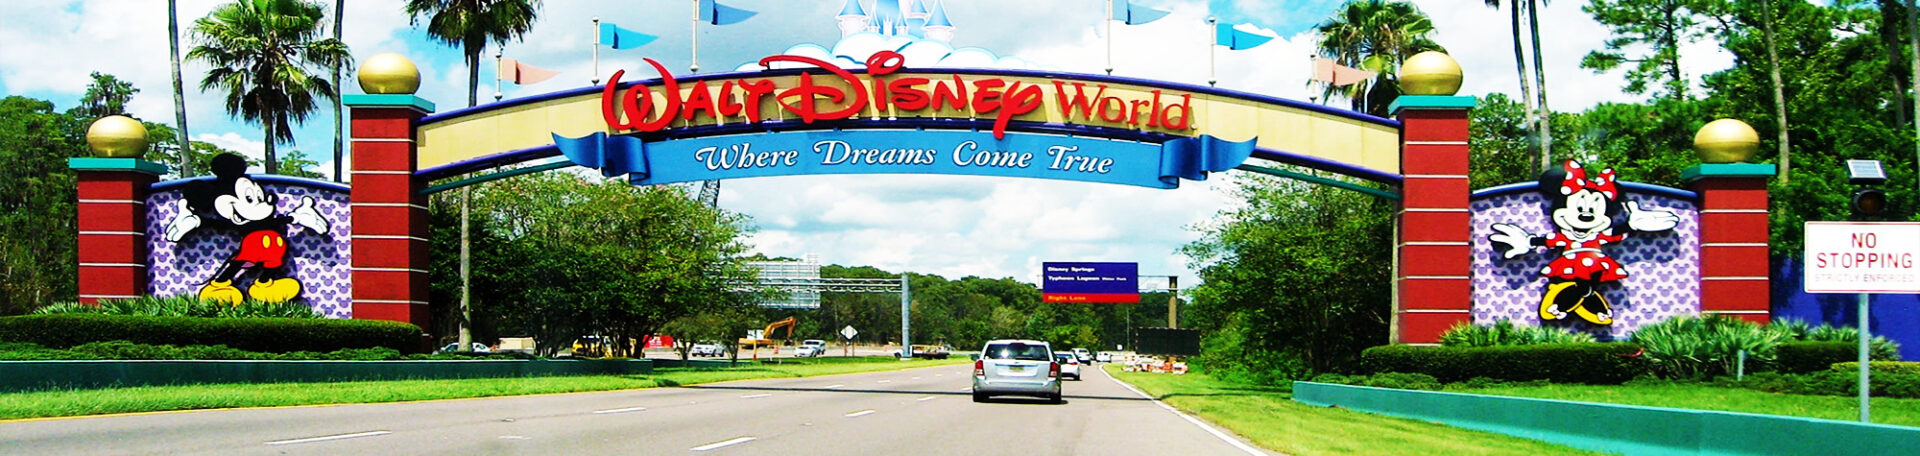 Orlando Airport Shuttle to Disney World